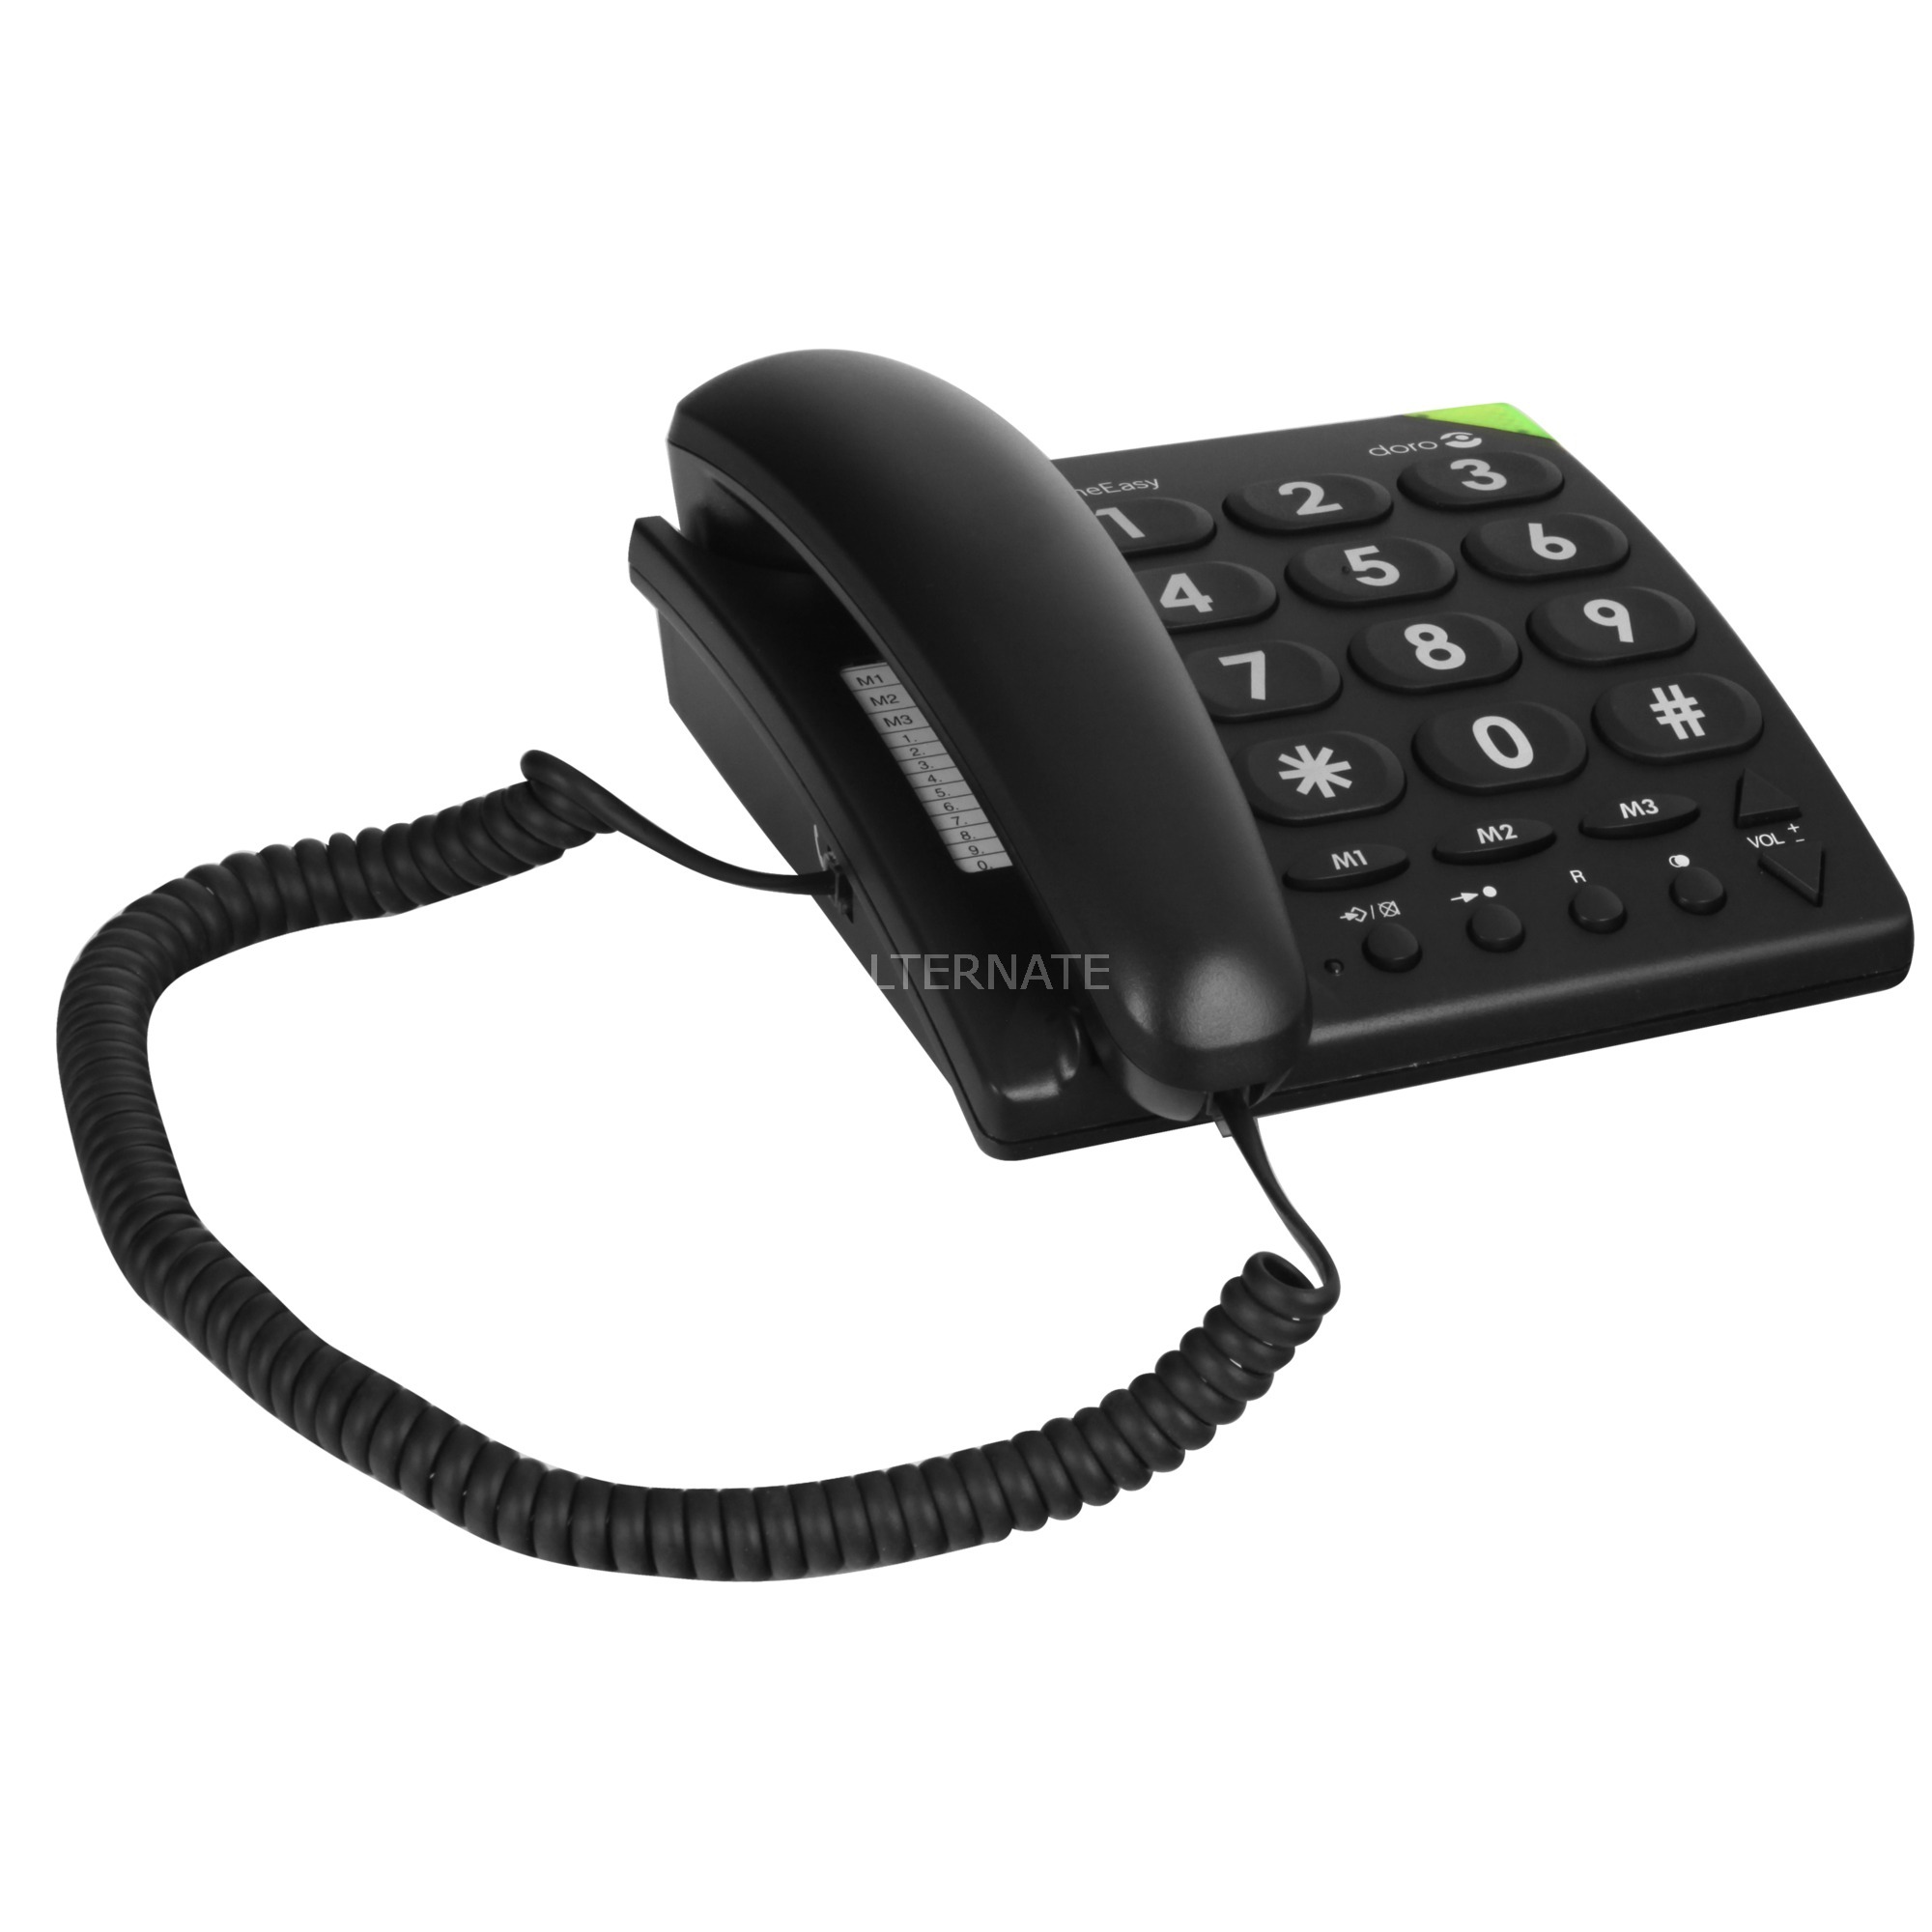 PhoneEasy 311c, analoges Telefon - Seniorenhandy Vergleich